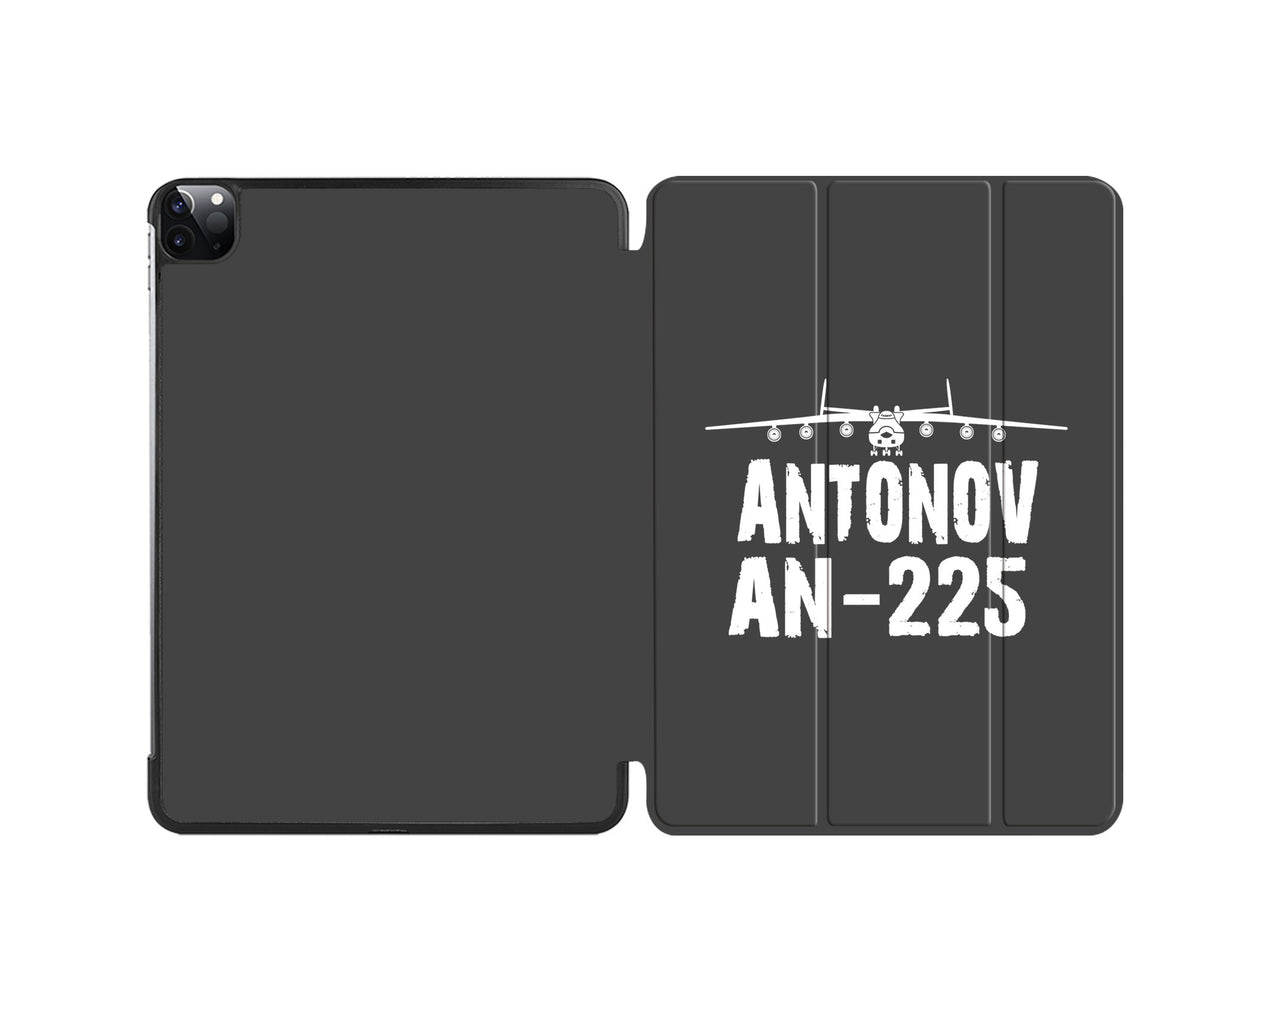 Antonov AN-225 & Plane Designed iPad Cases